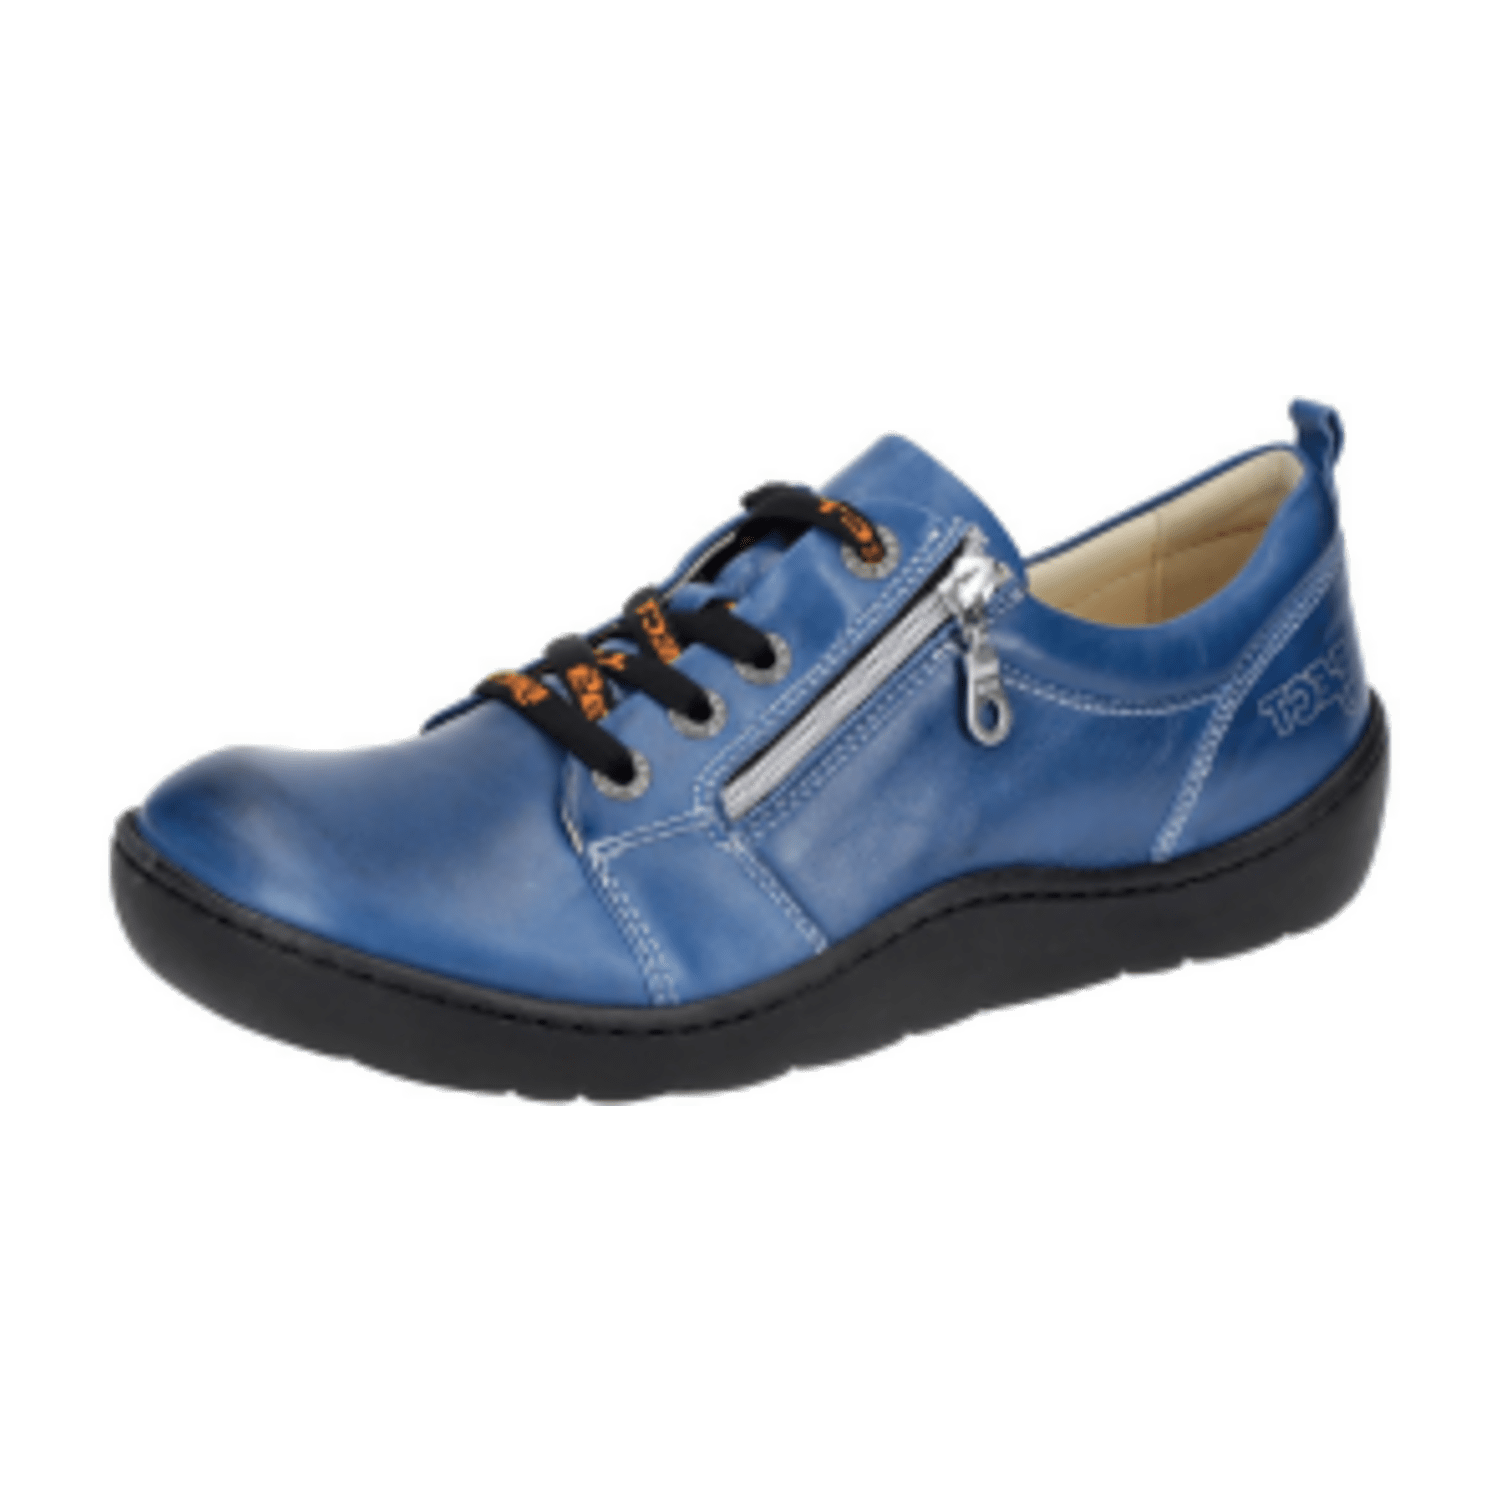 Eject Ocean Schuhe blau 19622.005